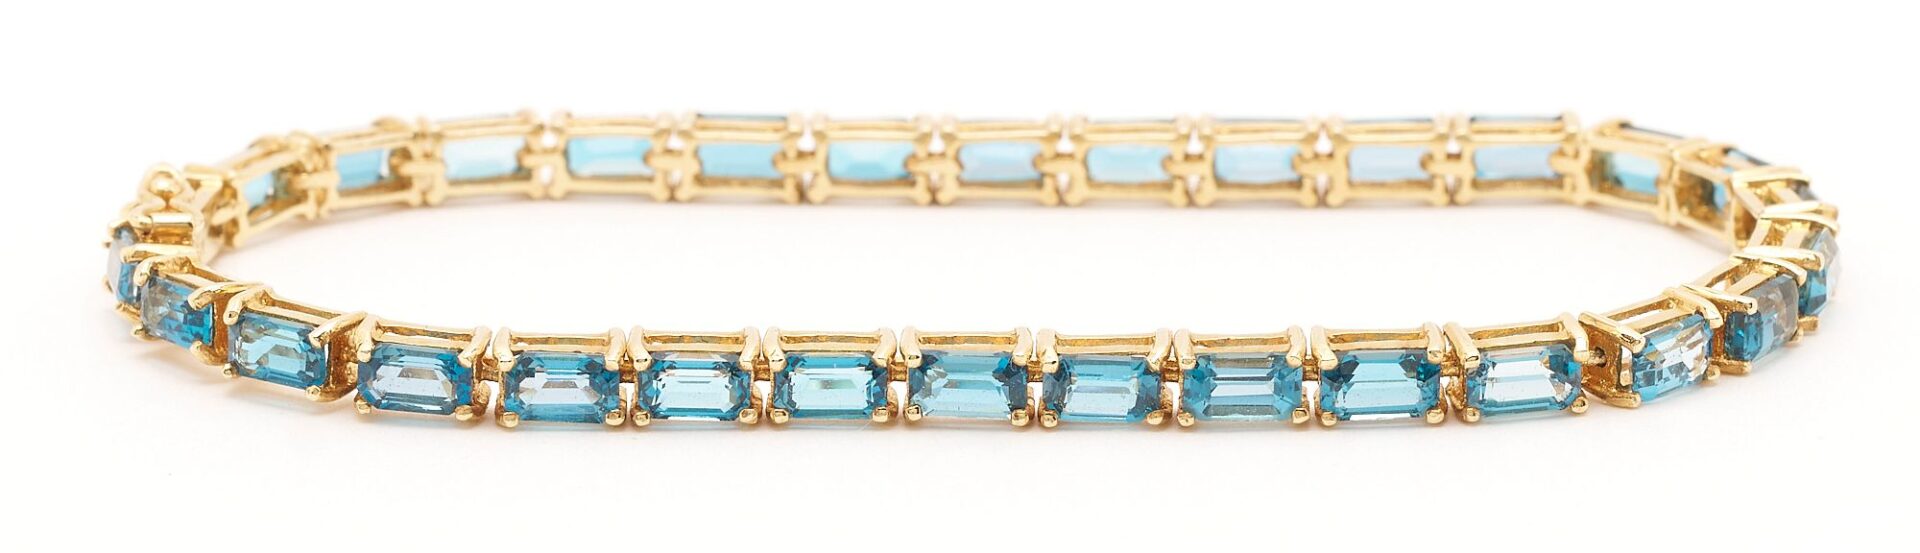 Lot 846: Gold & Blue Topaz Bracelet, Earrings, Brooch, and Pendant